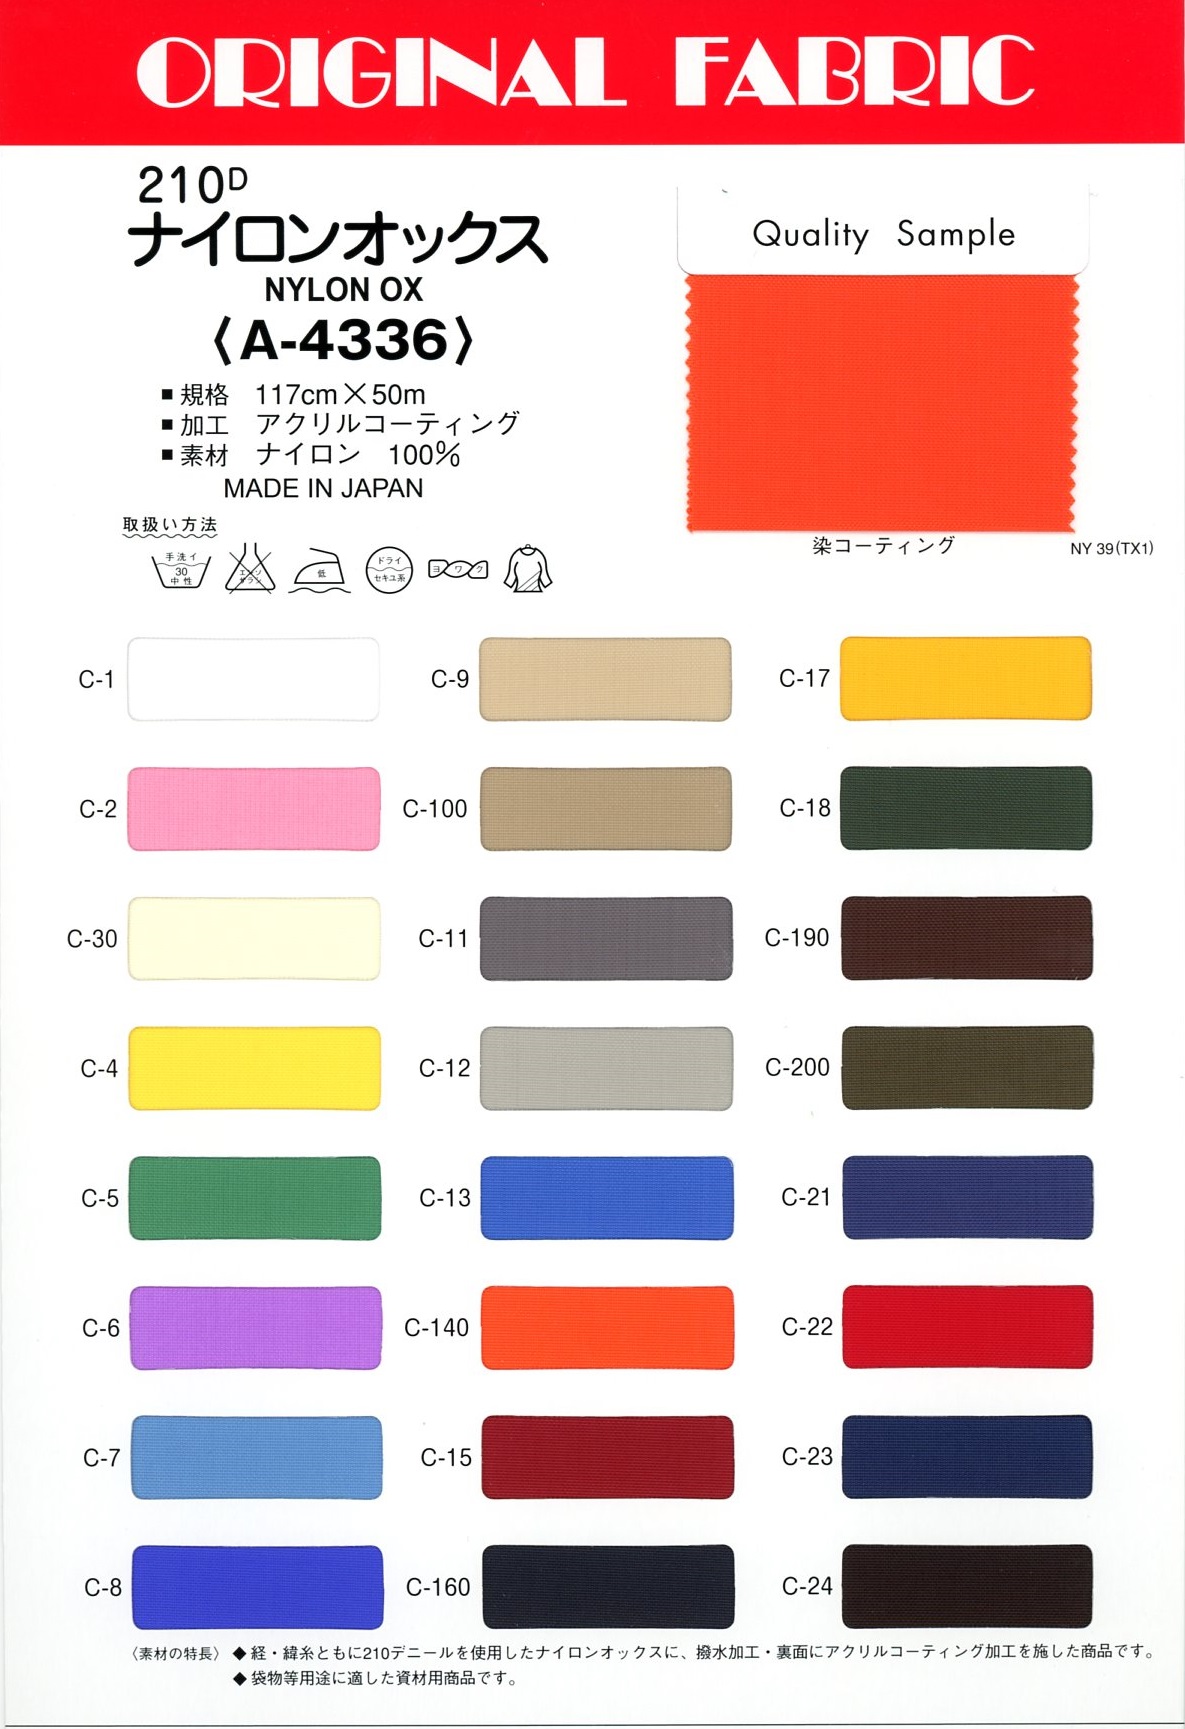 A4336 210D Nylon-Oxford[Textilgewebe] Masuda